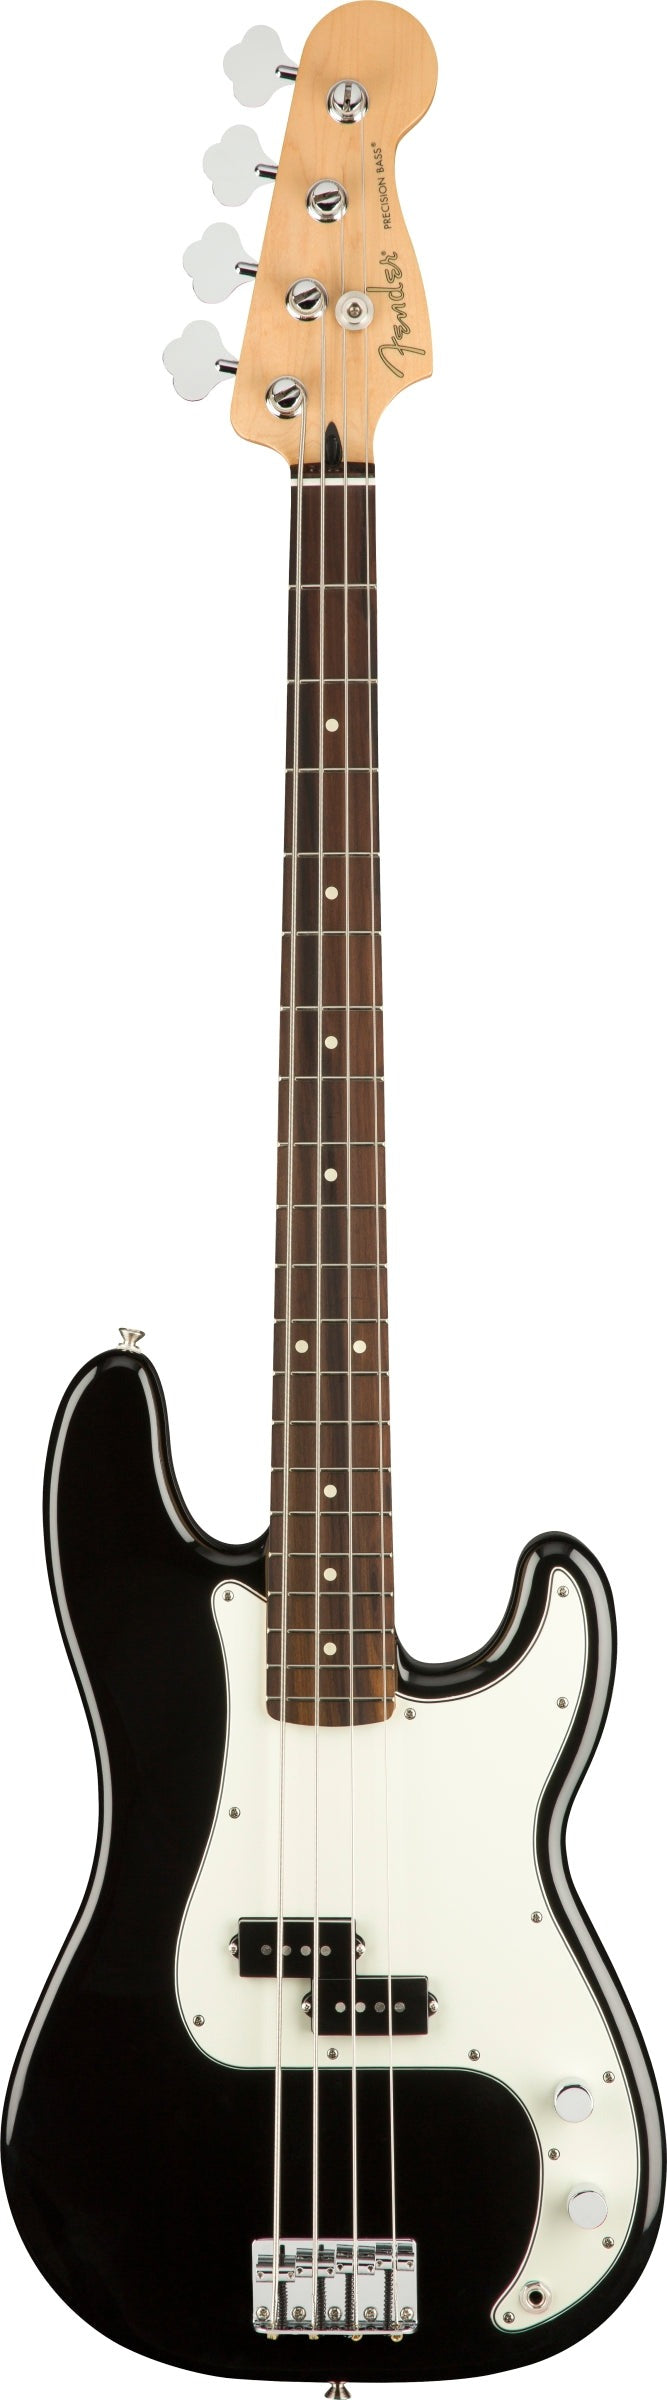 Fender Player Precision Electric Bass - Black